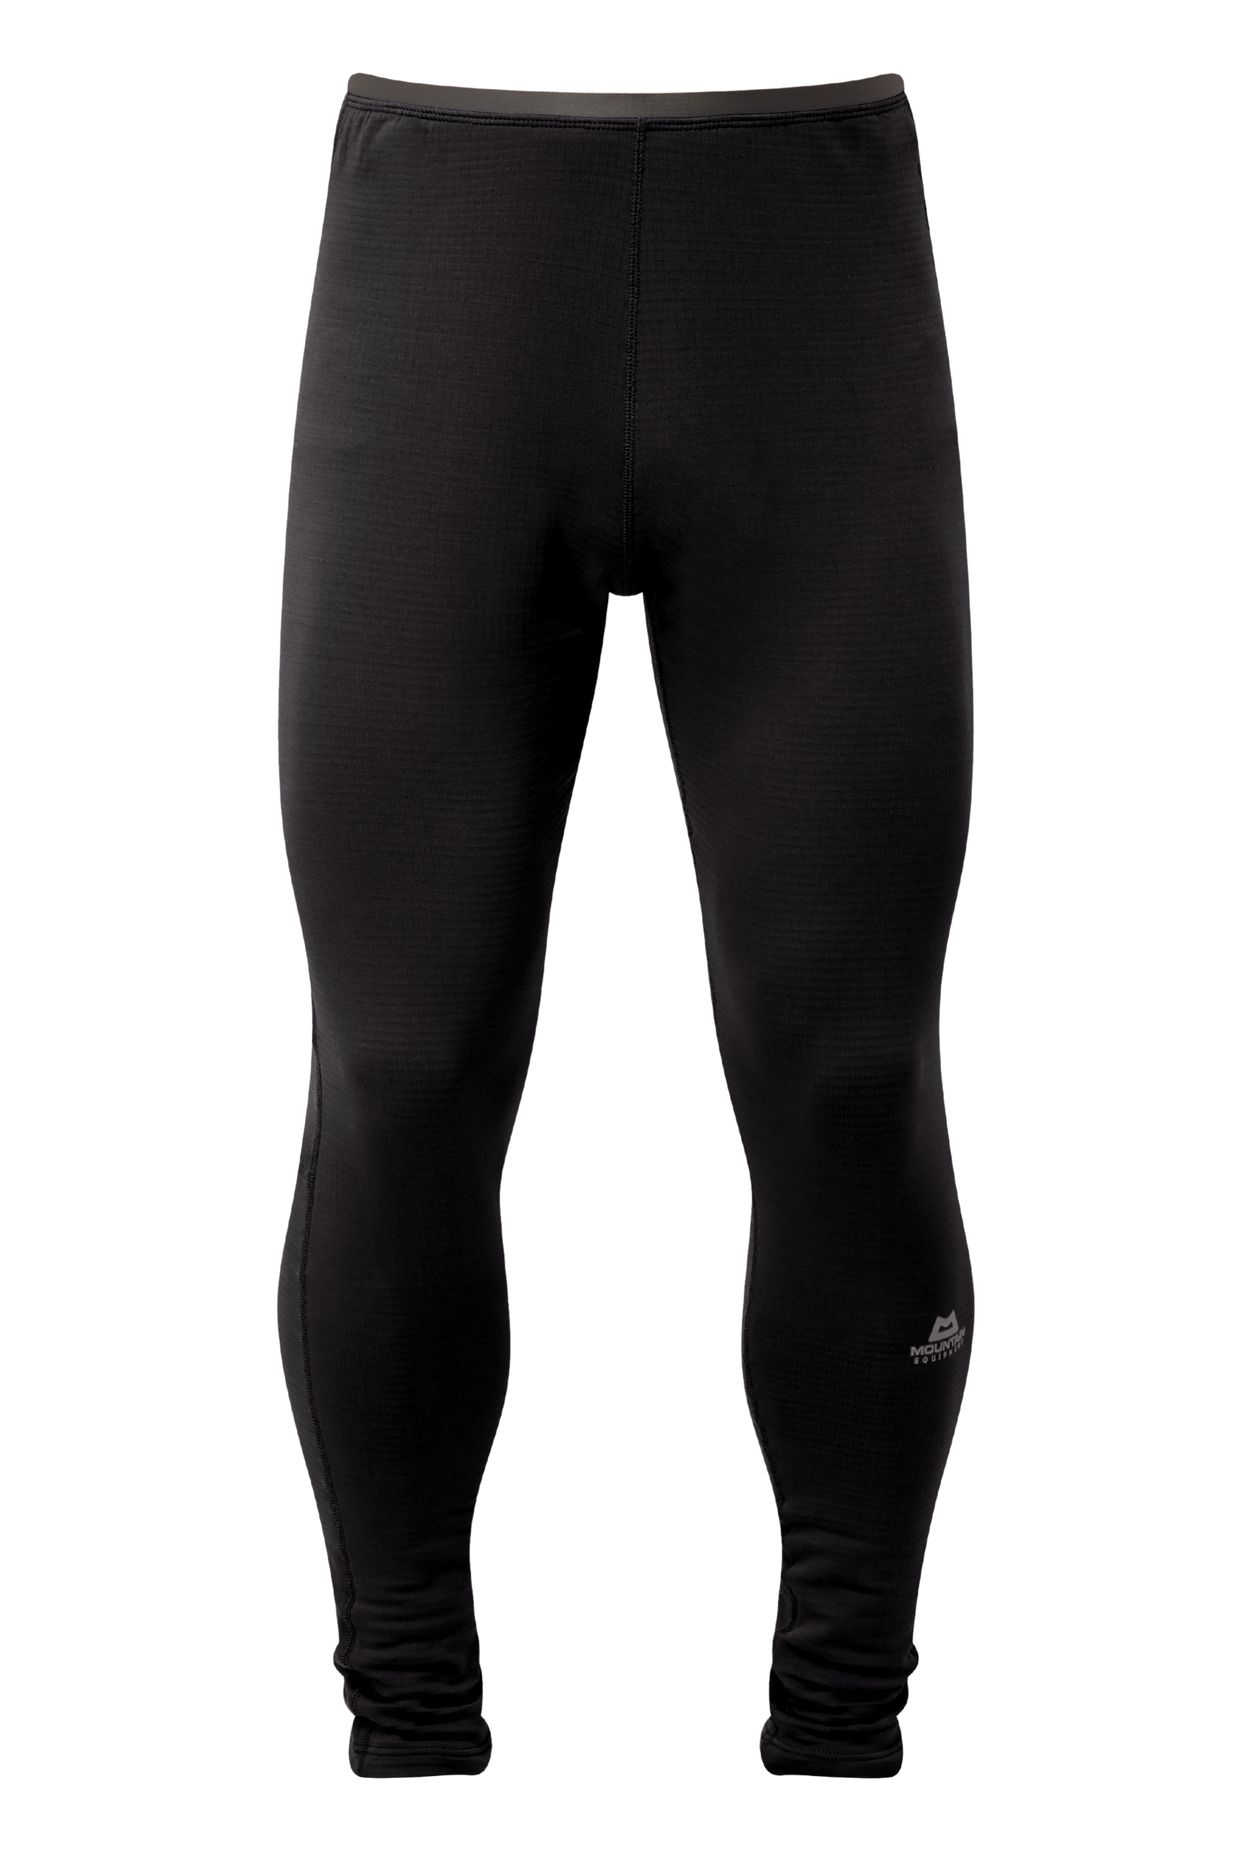 Mountain Equipment pánské fleece kalhoty Eclipse Pant Barva: black, Velikost: S